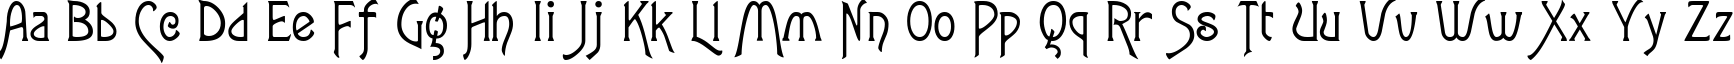 Пример написания английского алфавита шрифтом Agatha-Modern